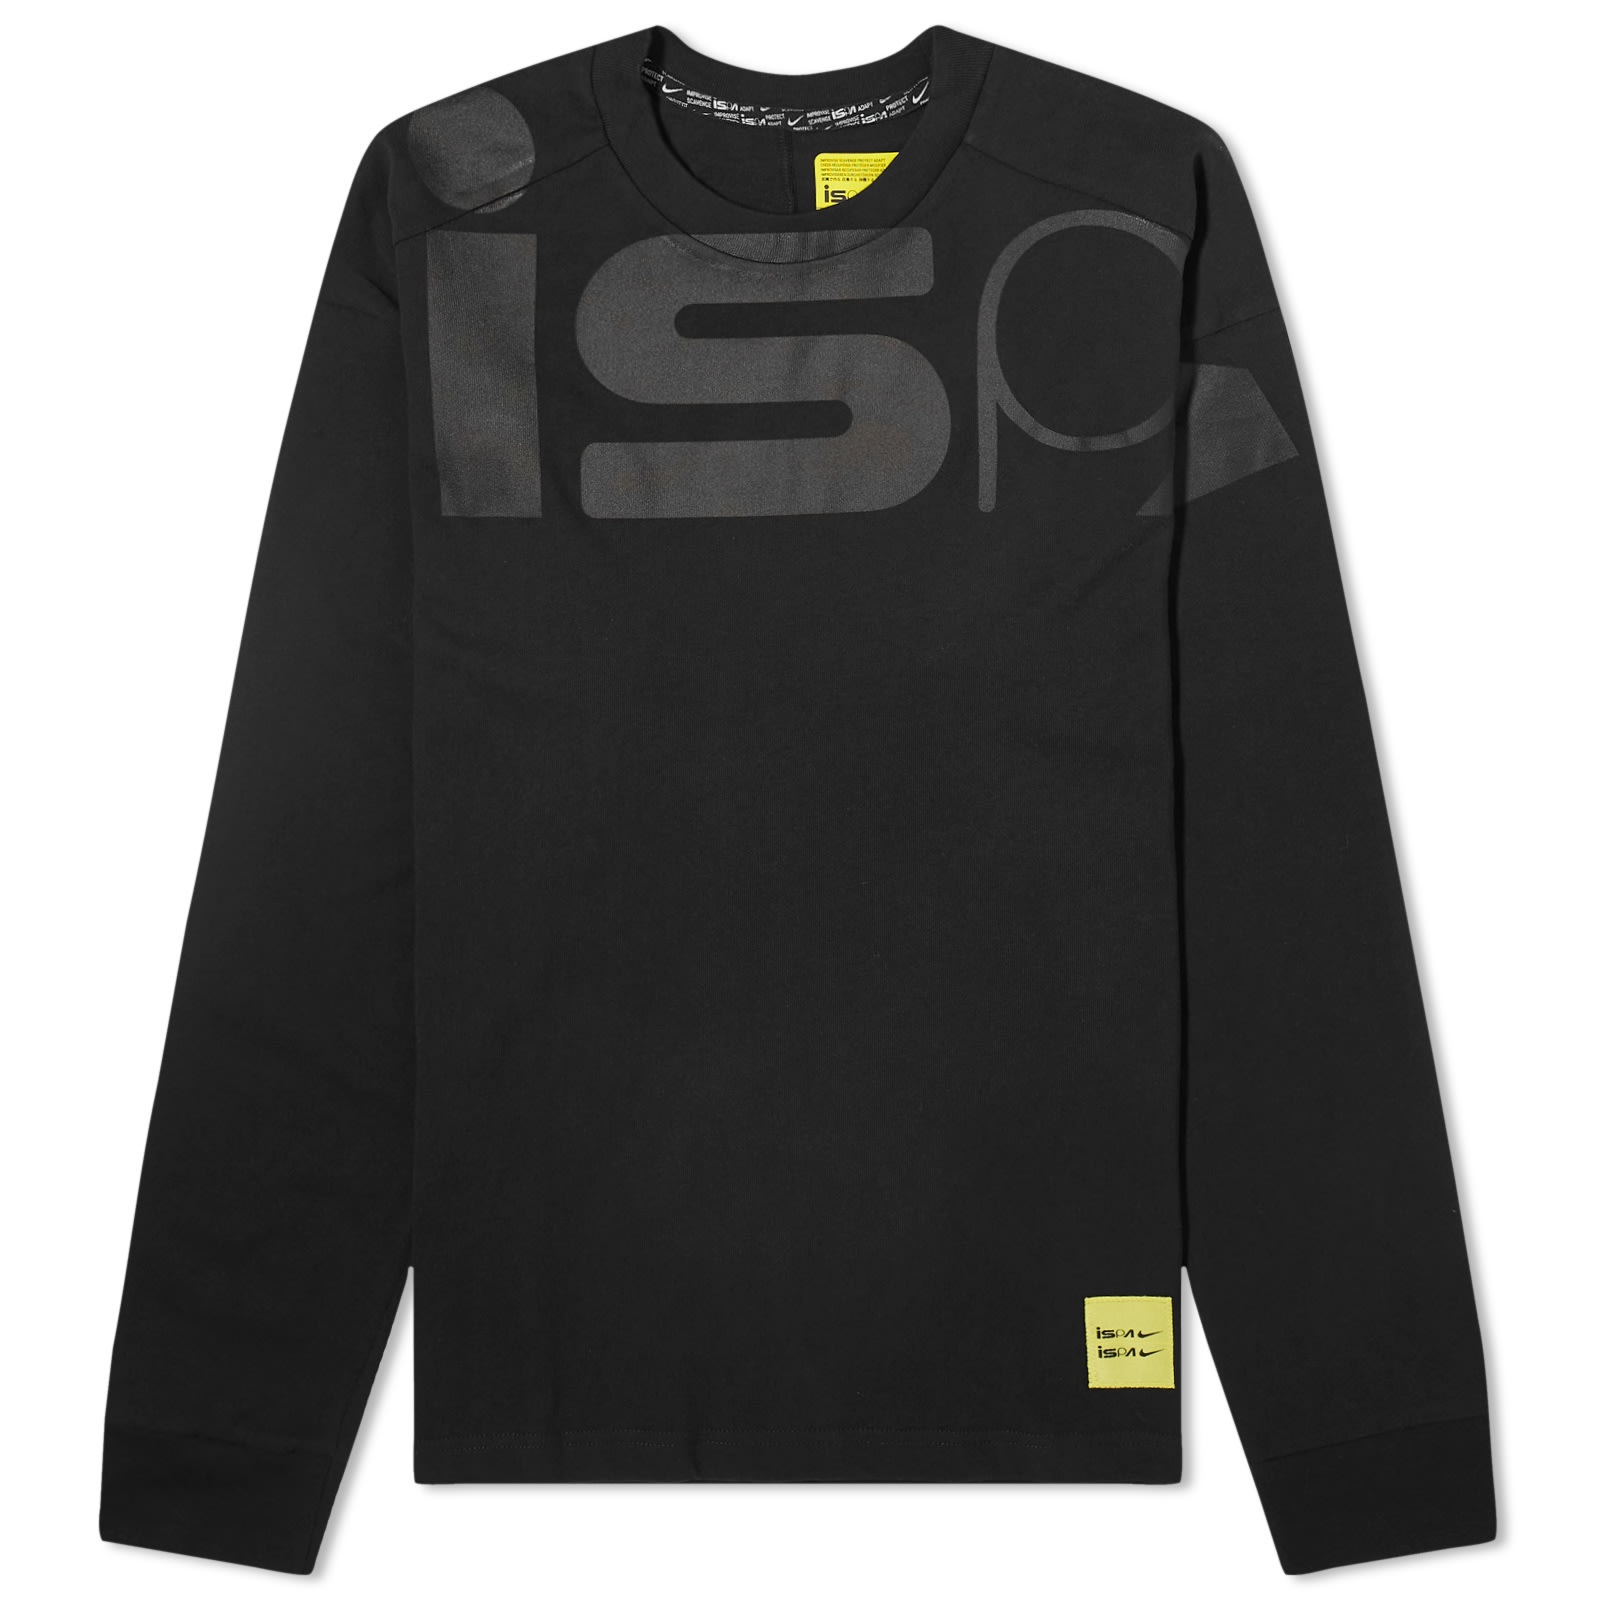 Nike ISPA Long Sleeve T-shirt - 1